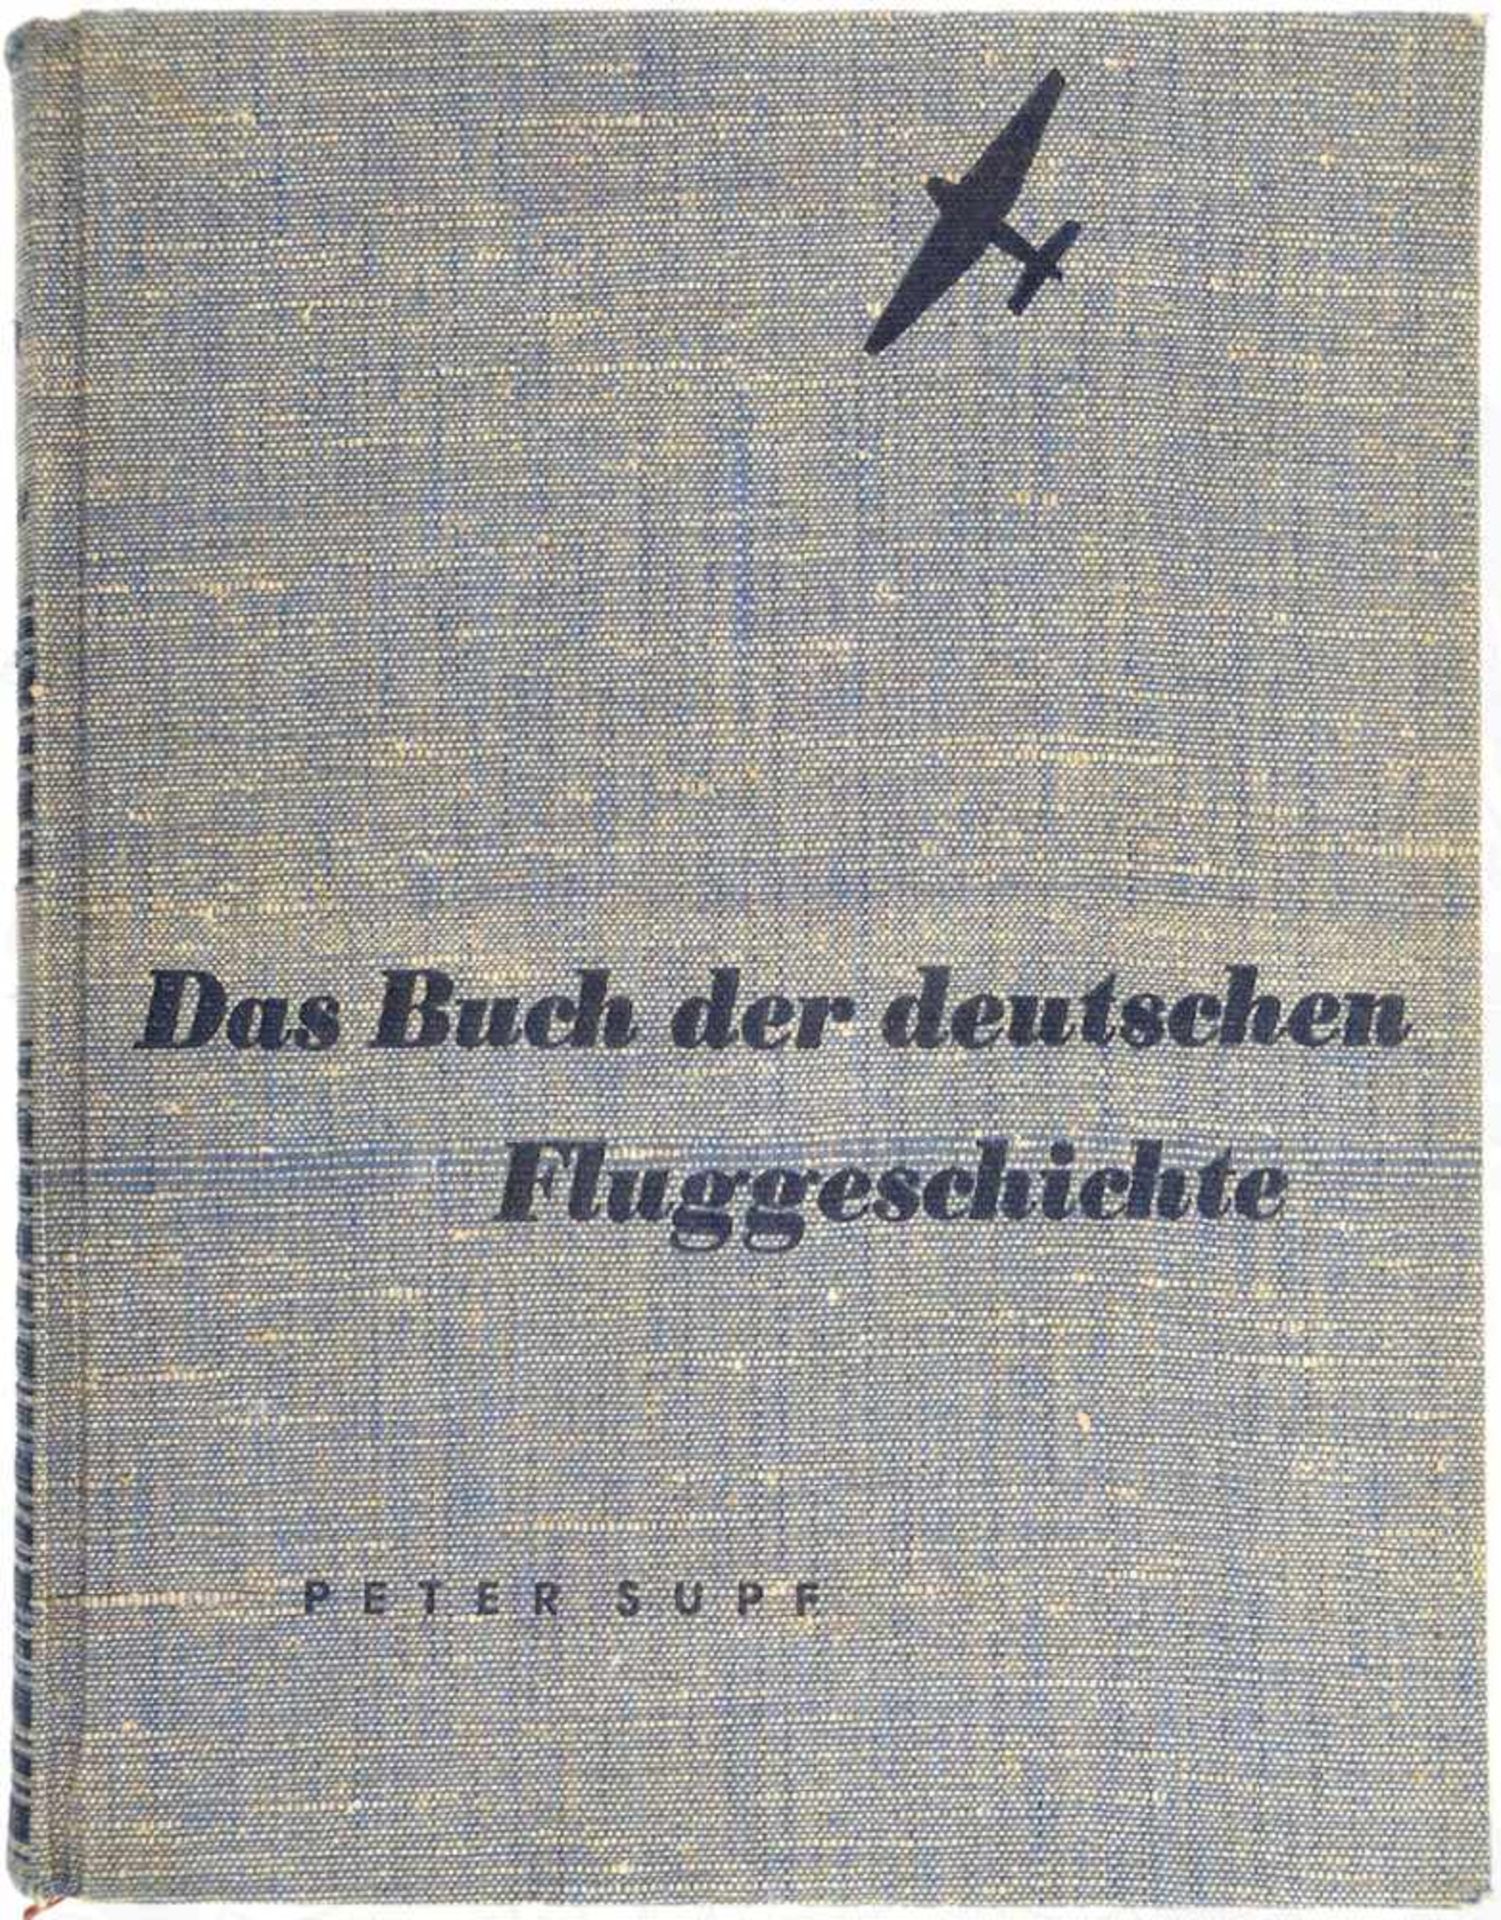 DAS BUCH DER DEUTSCHEN FLUGGESCHICHTE, Peter Supf, Berlin-Grunewald 1935, 518 S., 463 Fotos u.